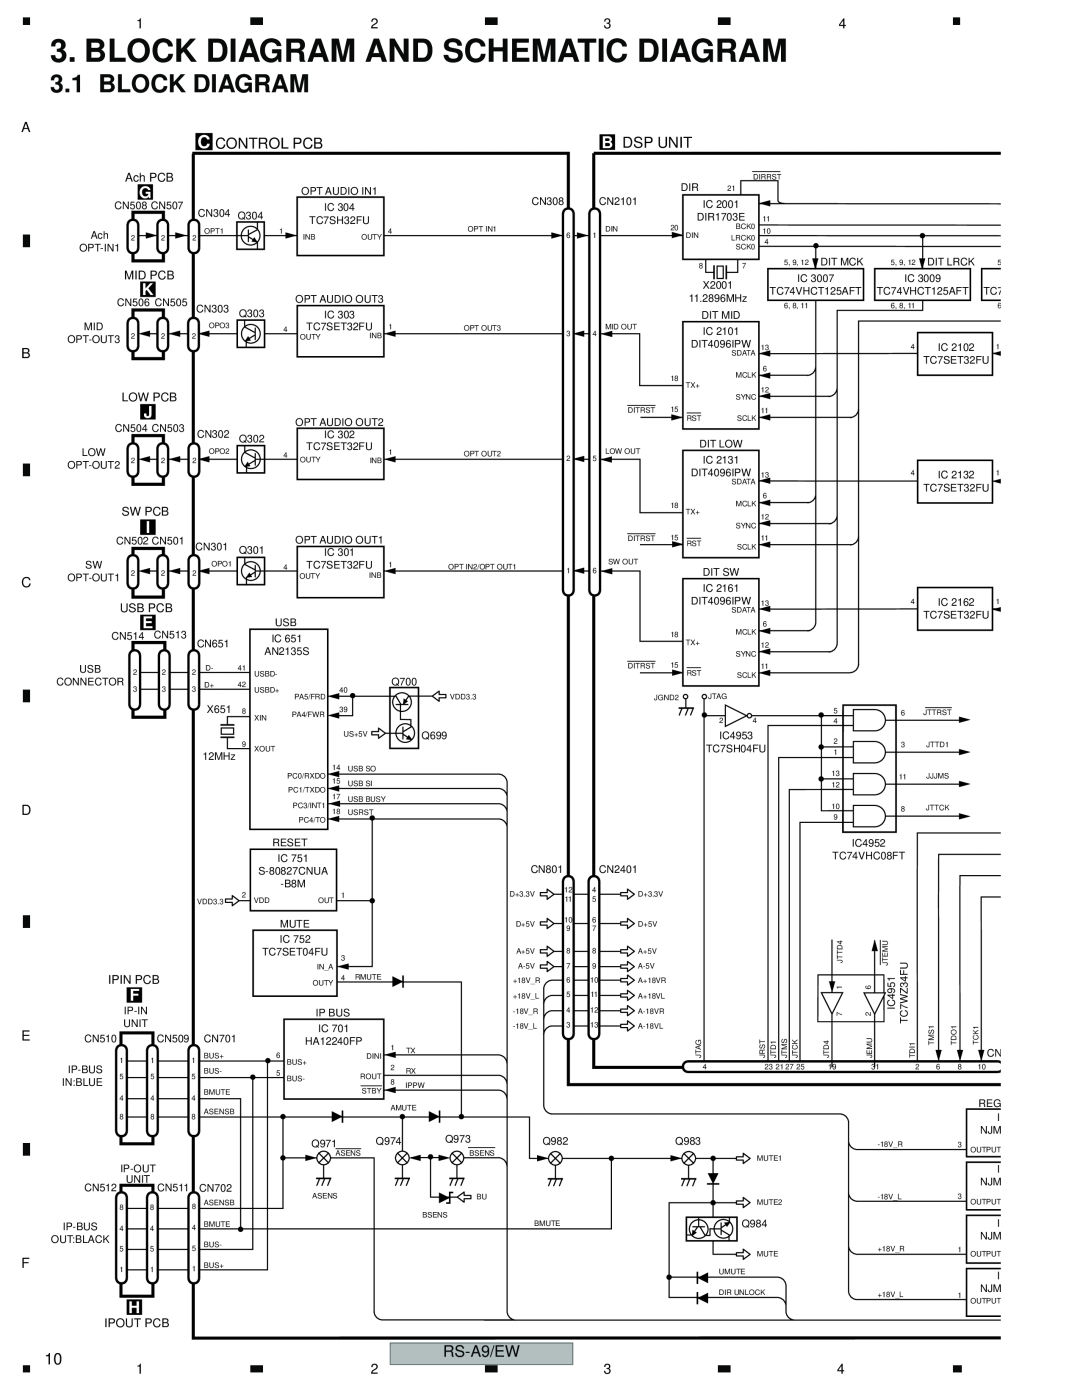 Pioneer RS-A9/EW manual Block Diagram And Schematic Diagram 